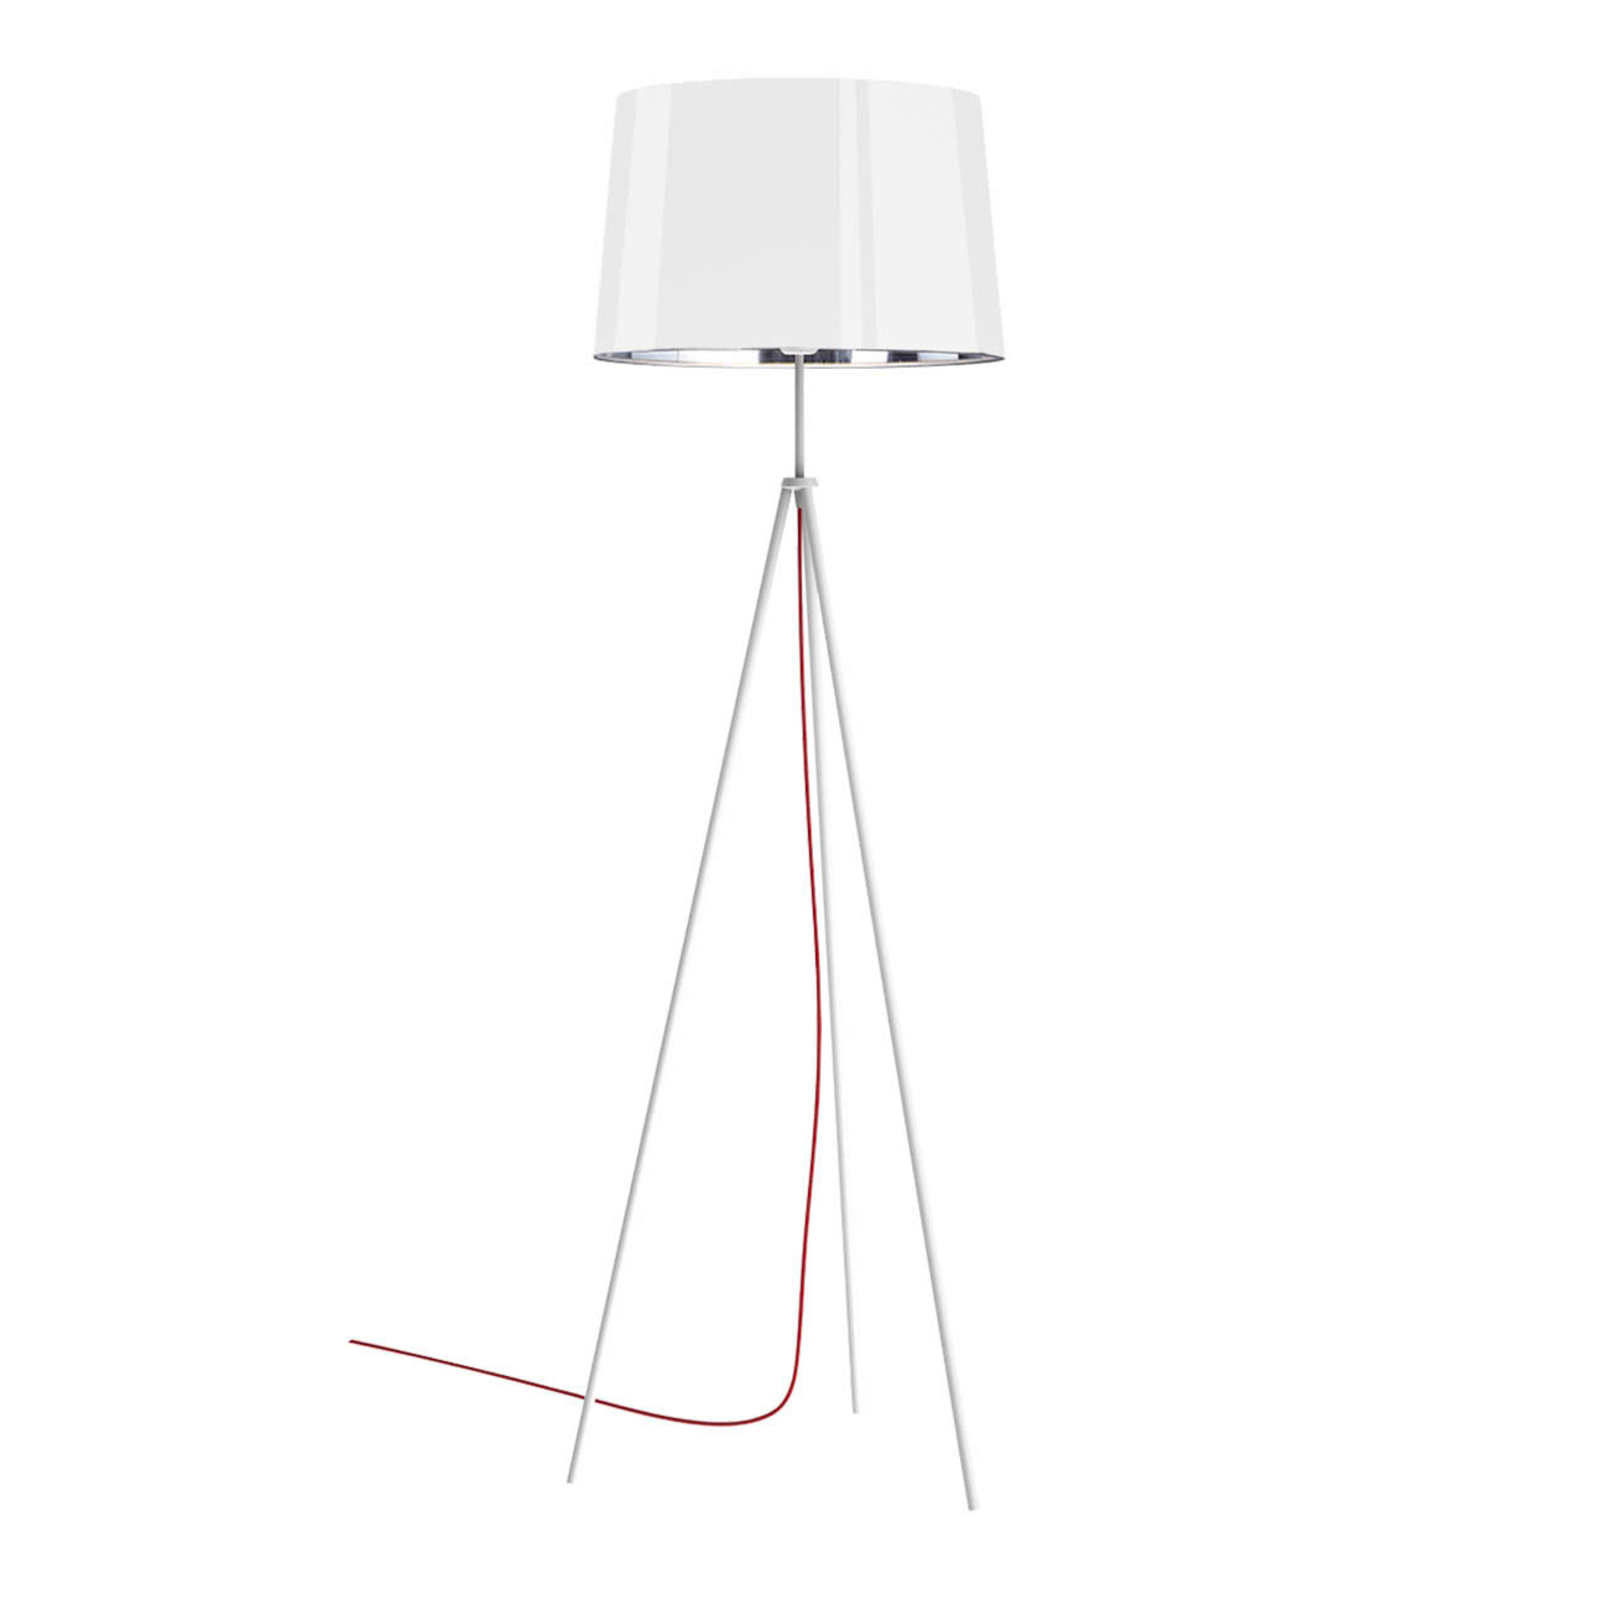 Aluminor Tropic vloerlamp wit, kabel rood